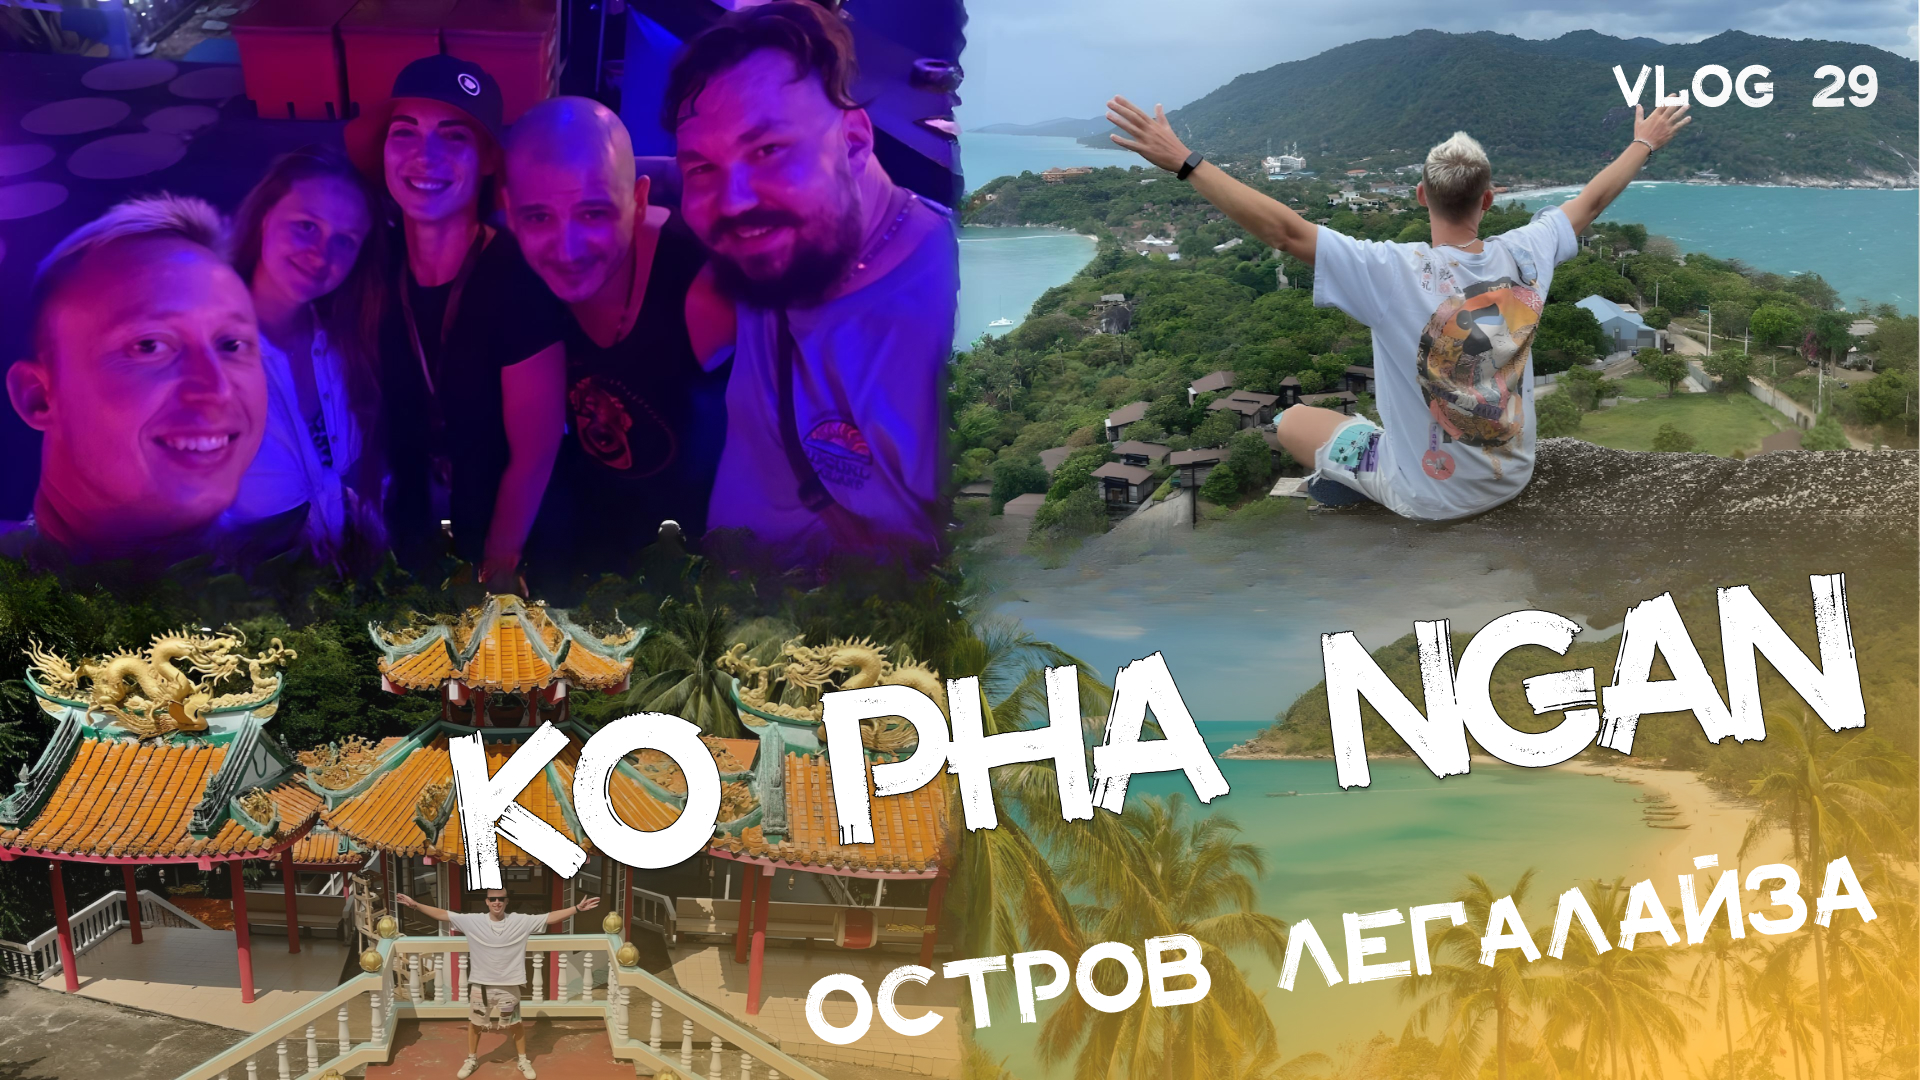 Остров Koh Phangan: фестиваль Full Moon Party, друзья, океан, природа и культура